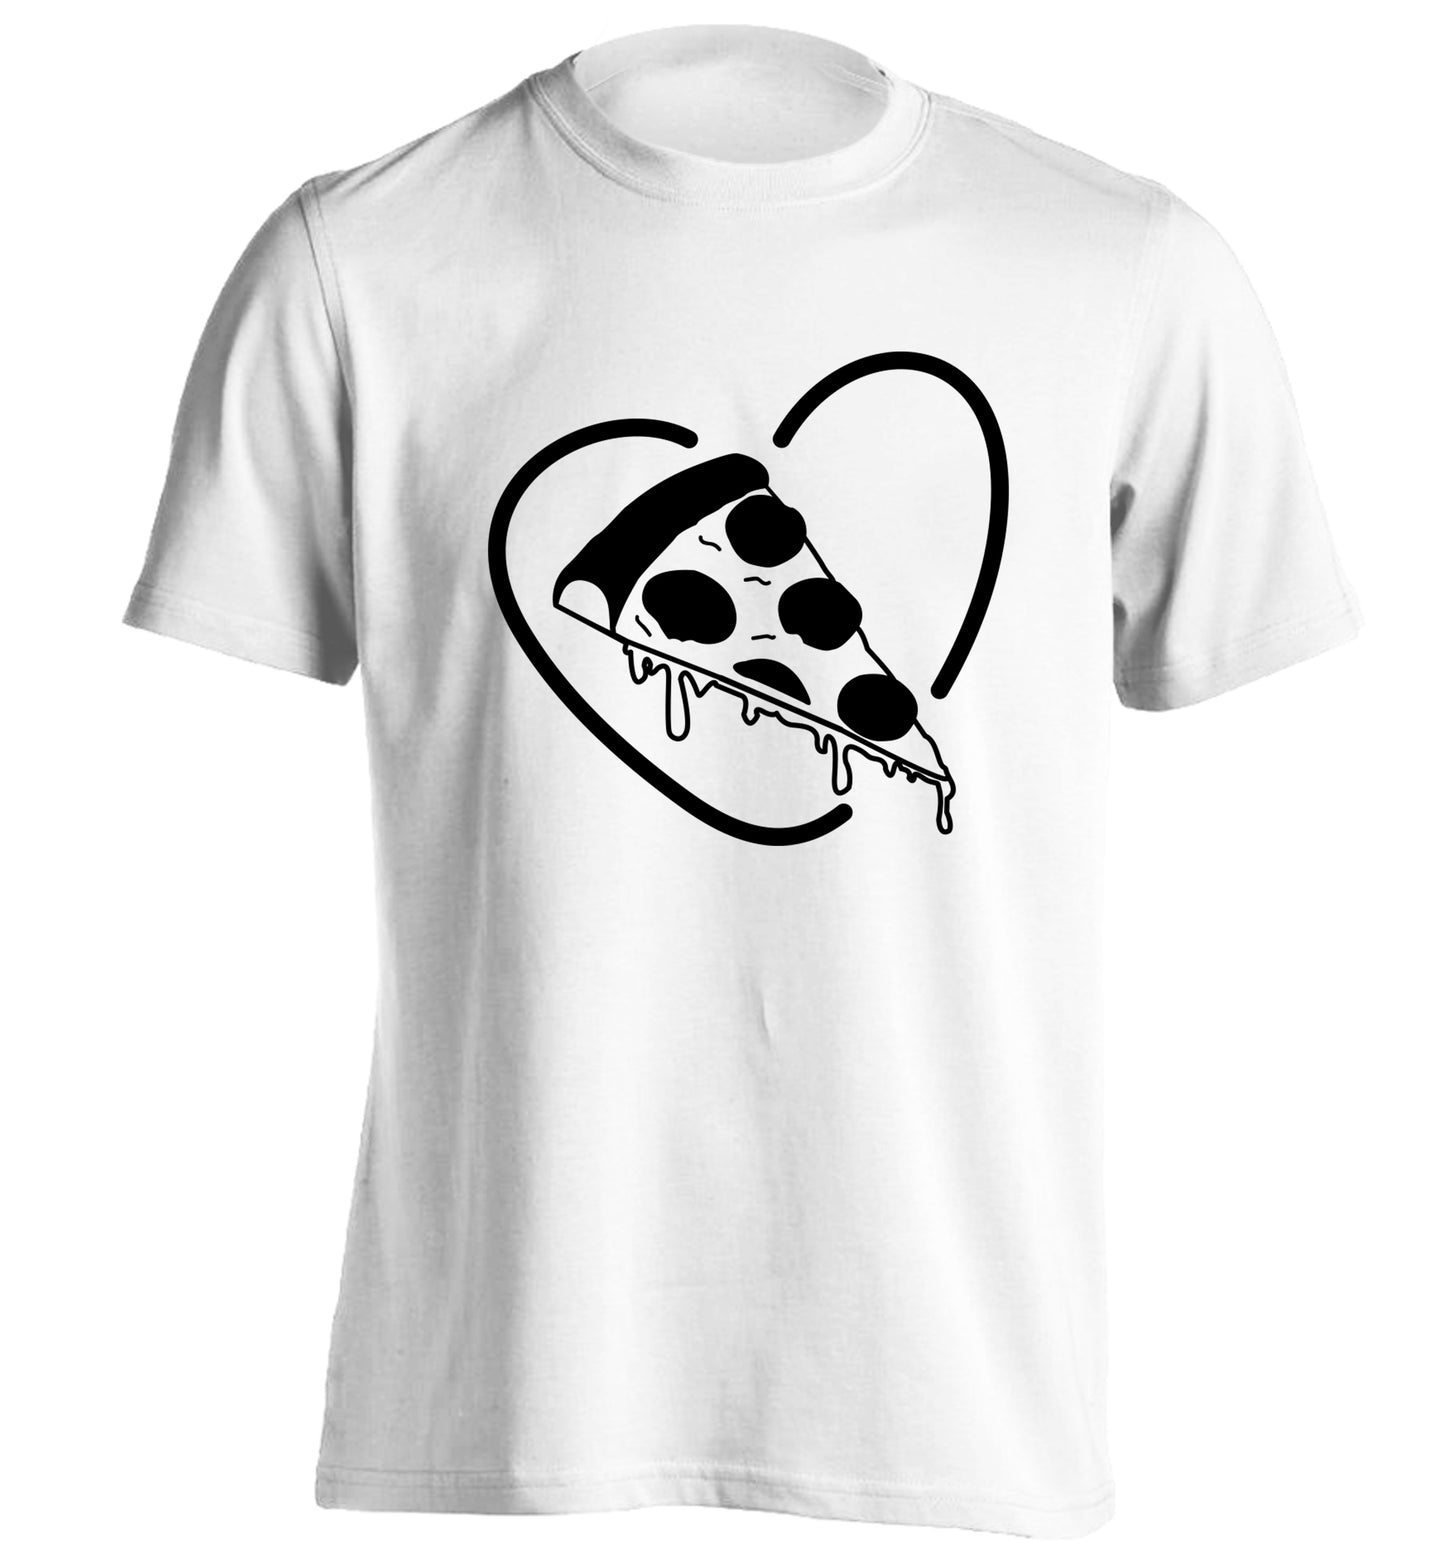 Pizza heart adults unisex white Tshirt 2XL